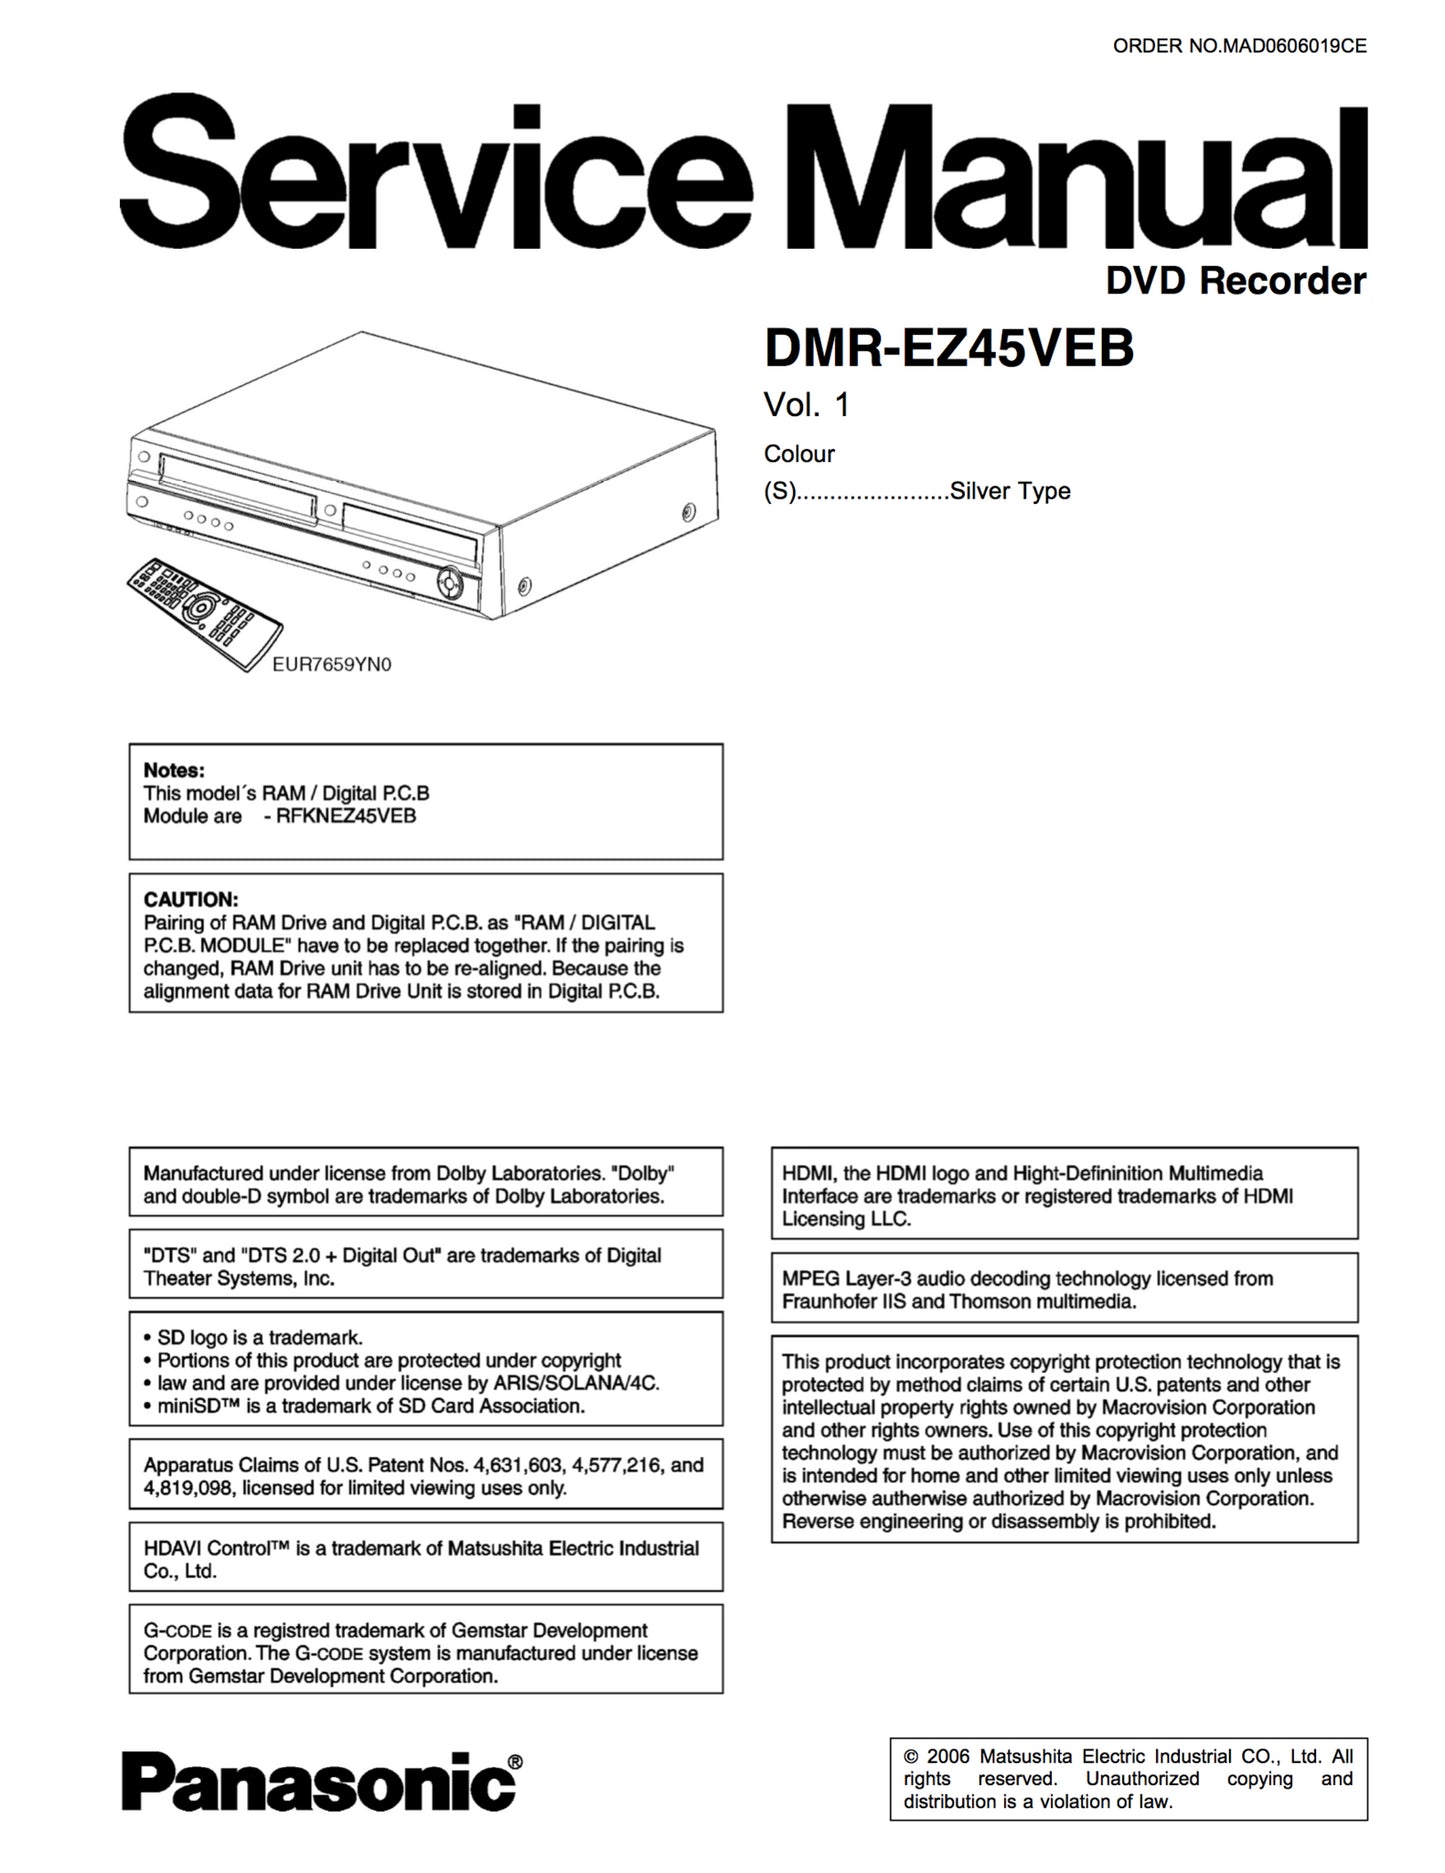 Panasonic DMR-EZ45VEB Service Manual Complete